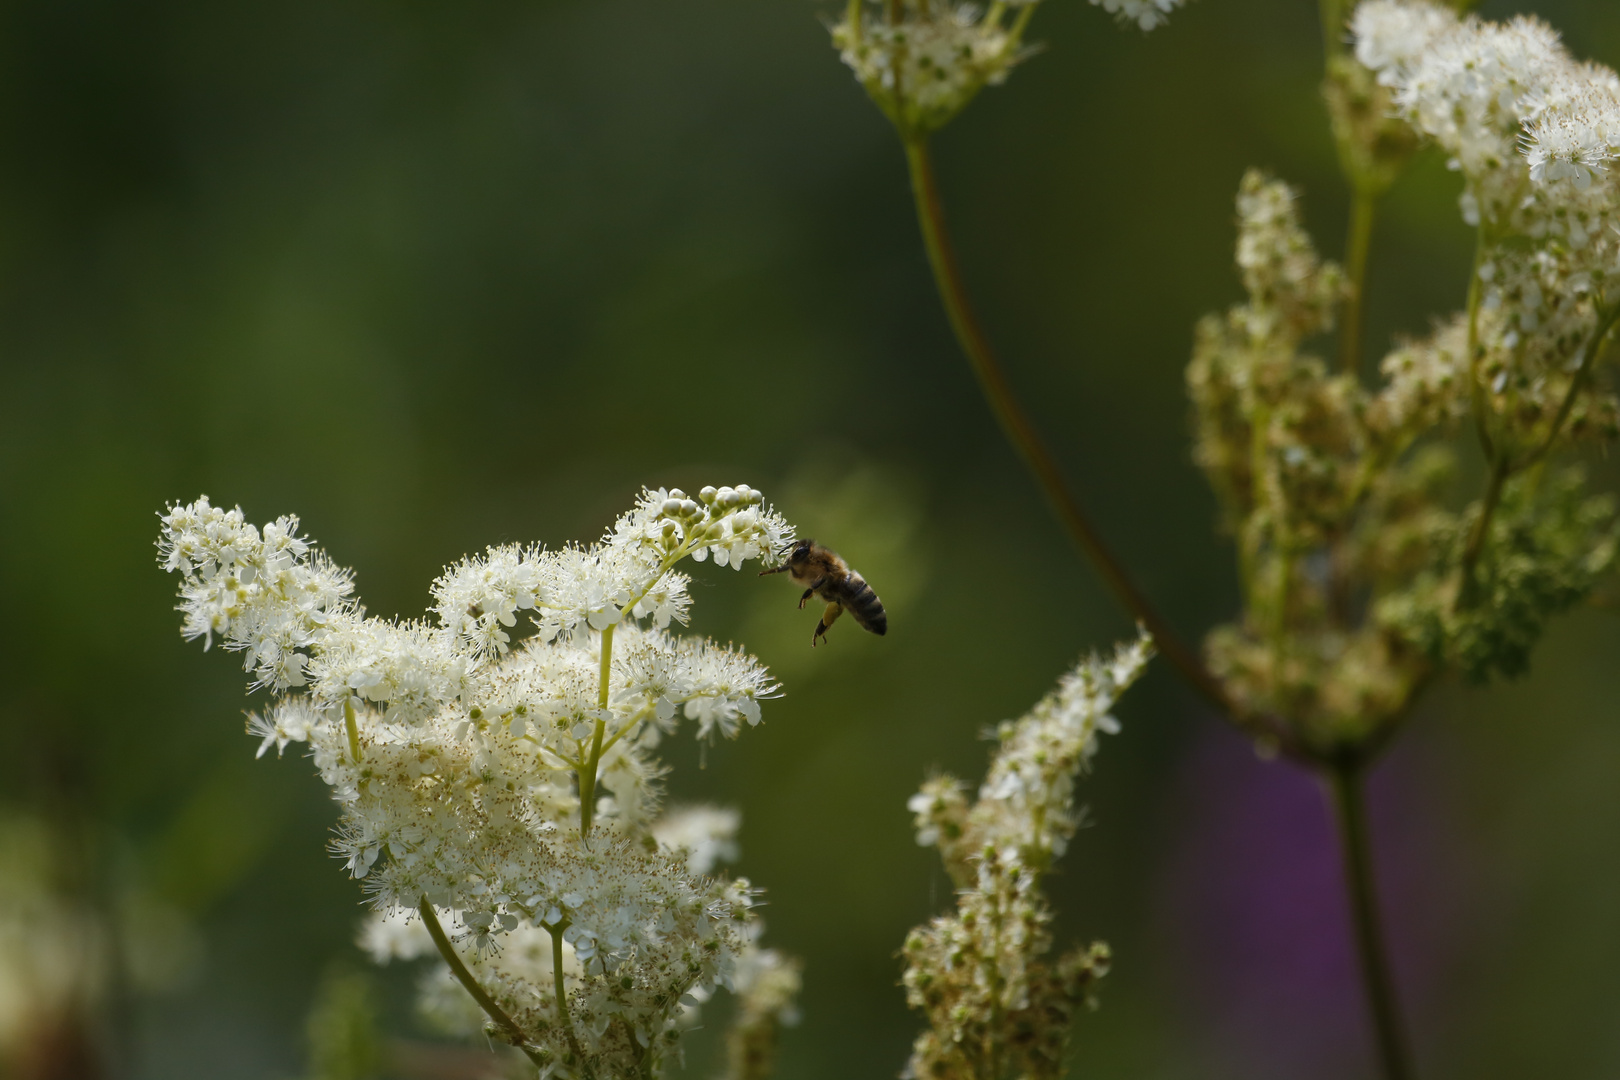 Sommerwiese (III) - Mädesüß und Biene